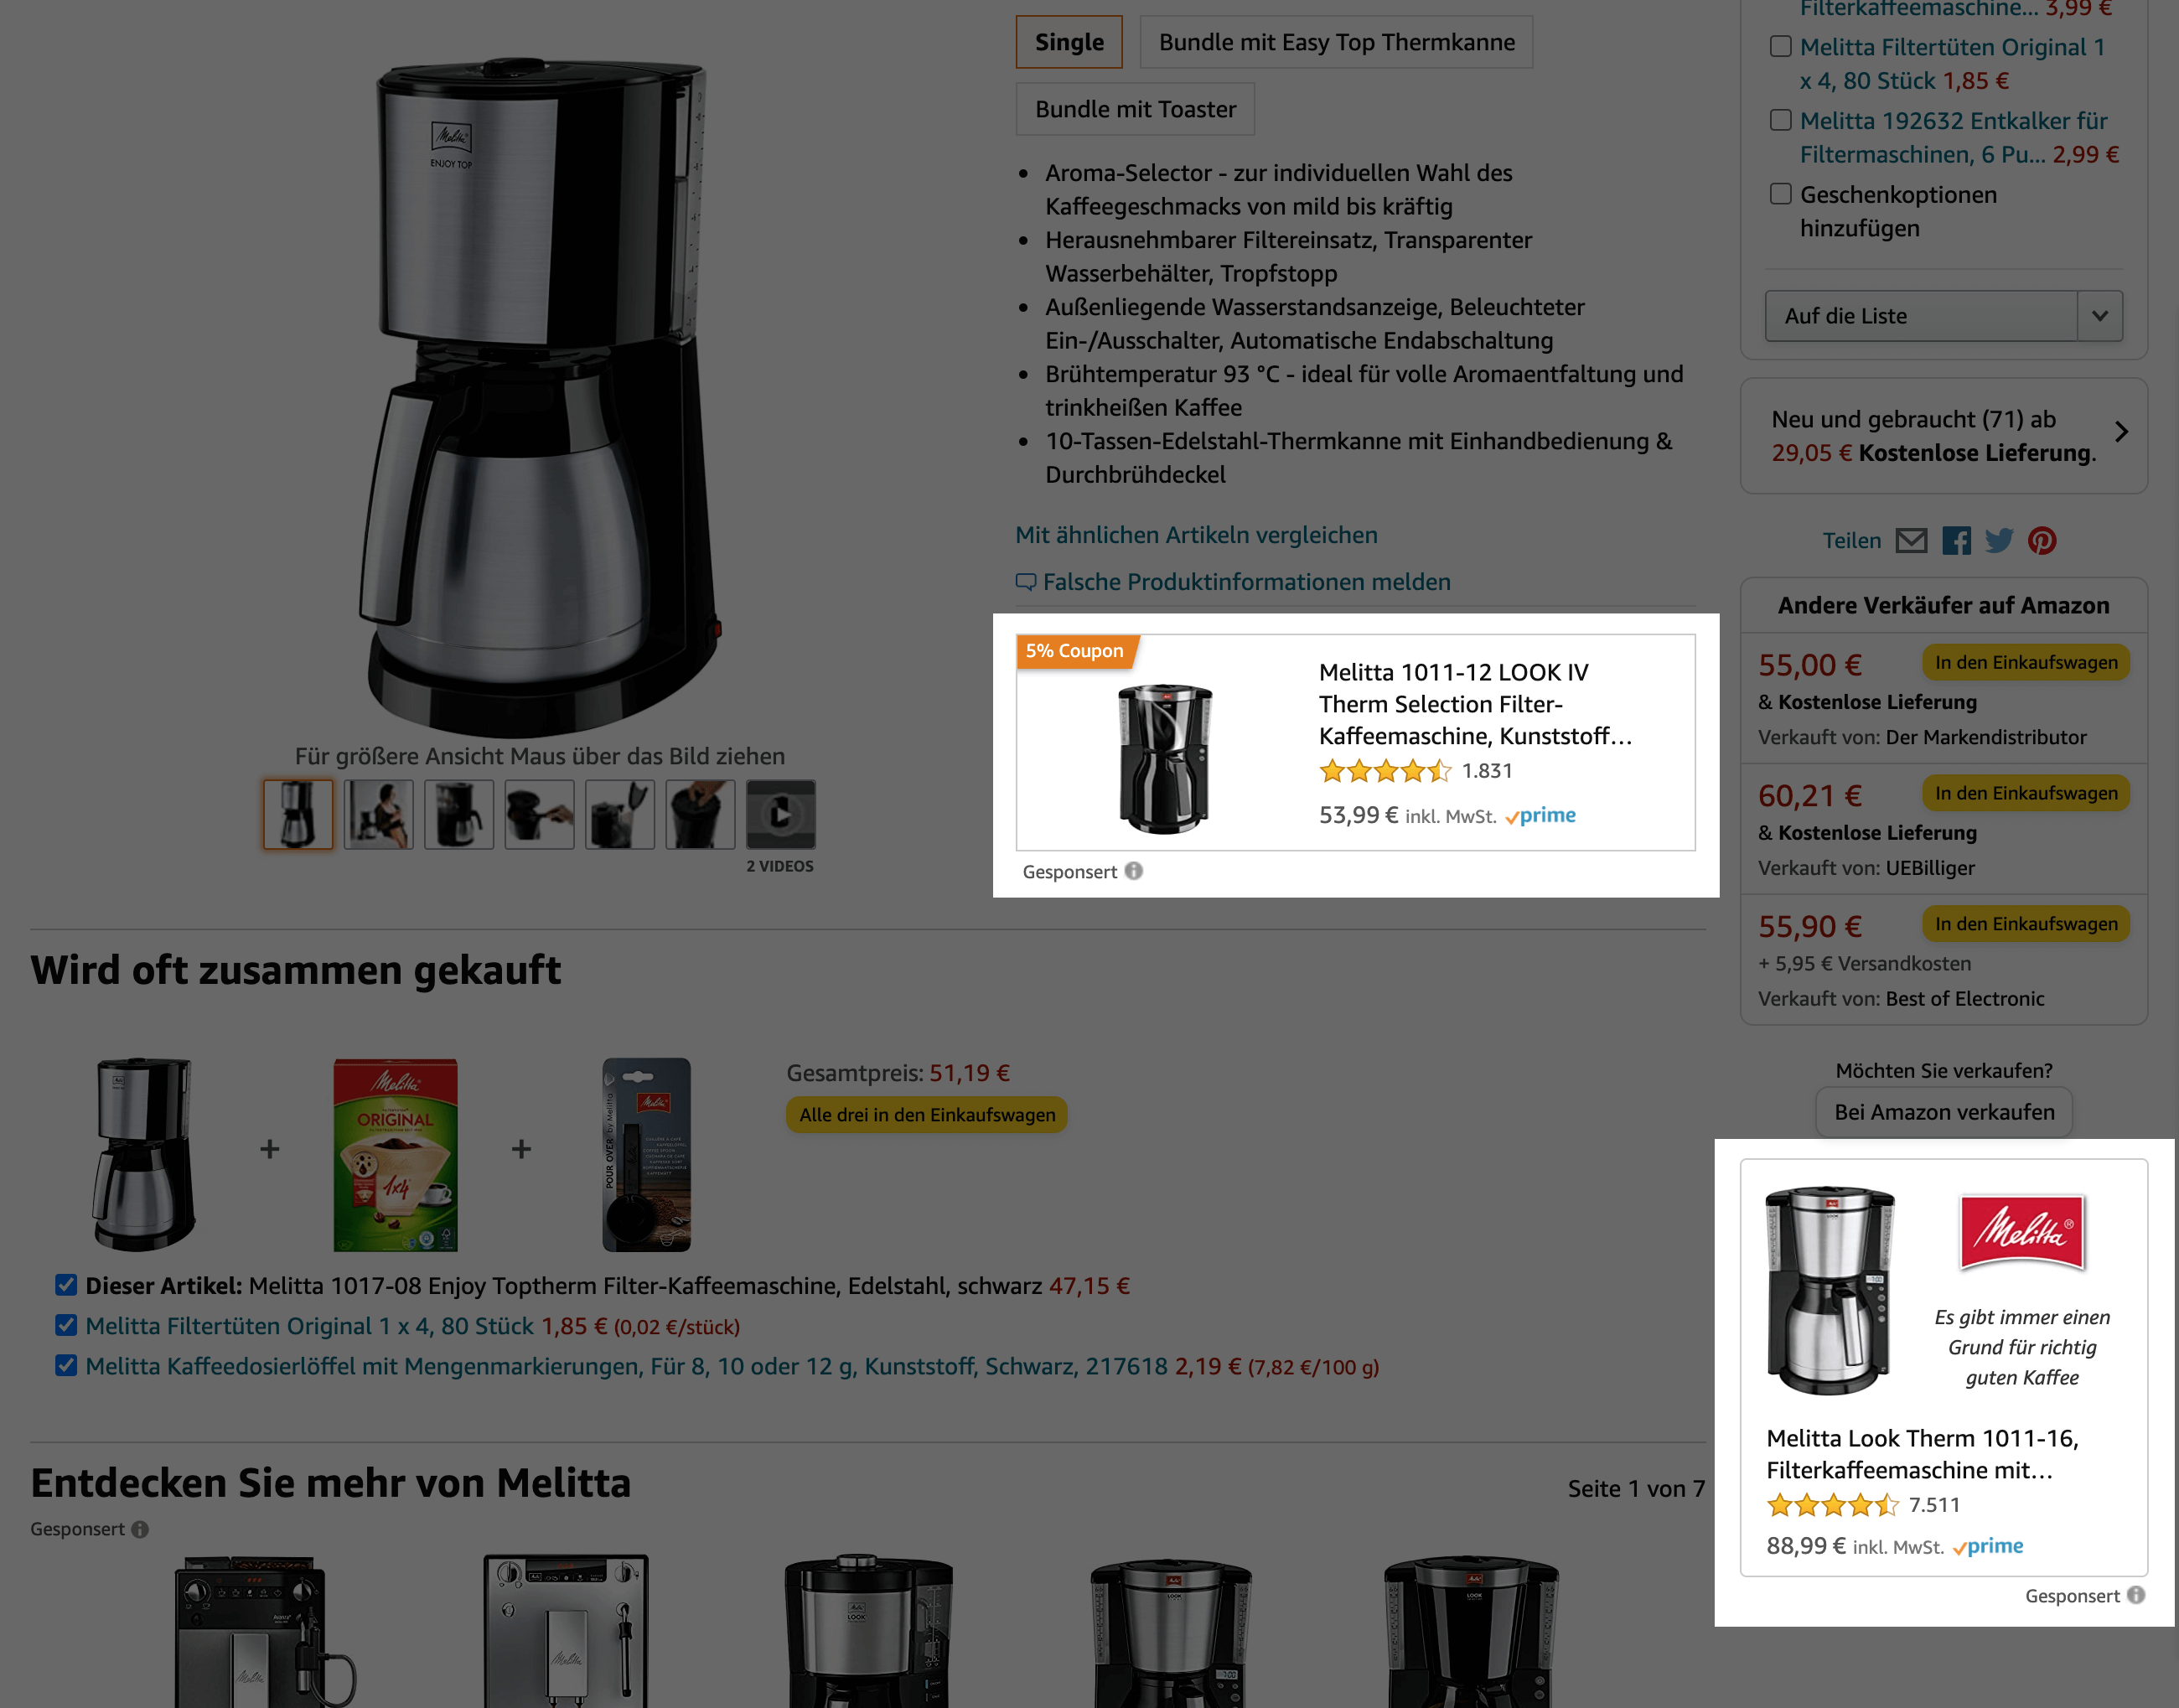 Amazon Sponsored Display Ads-Beispiel.